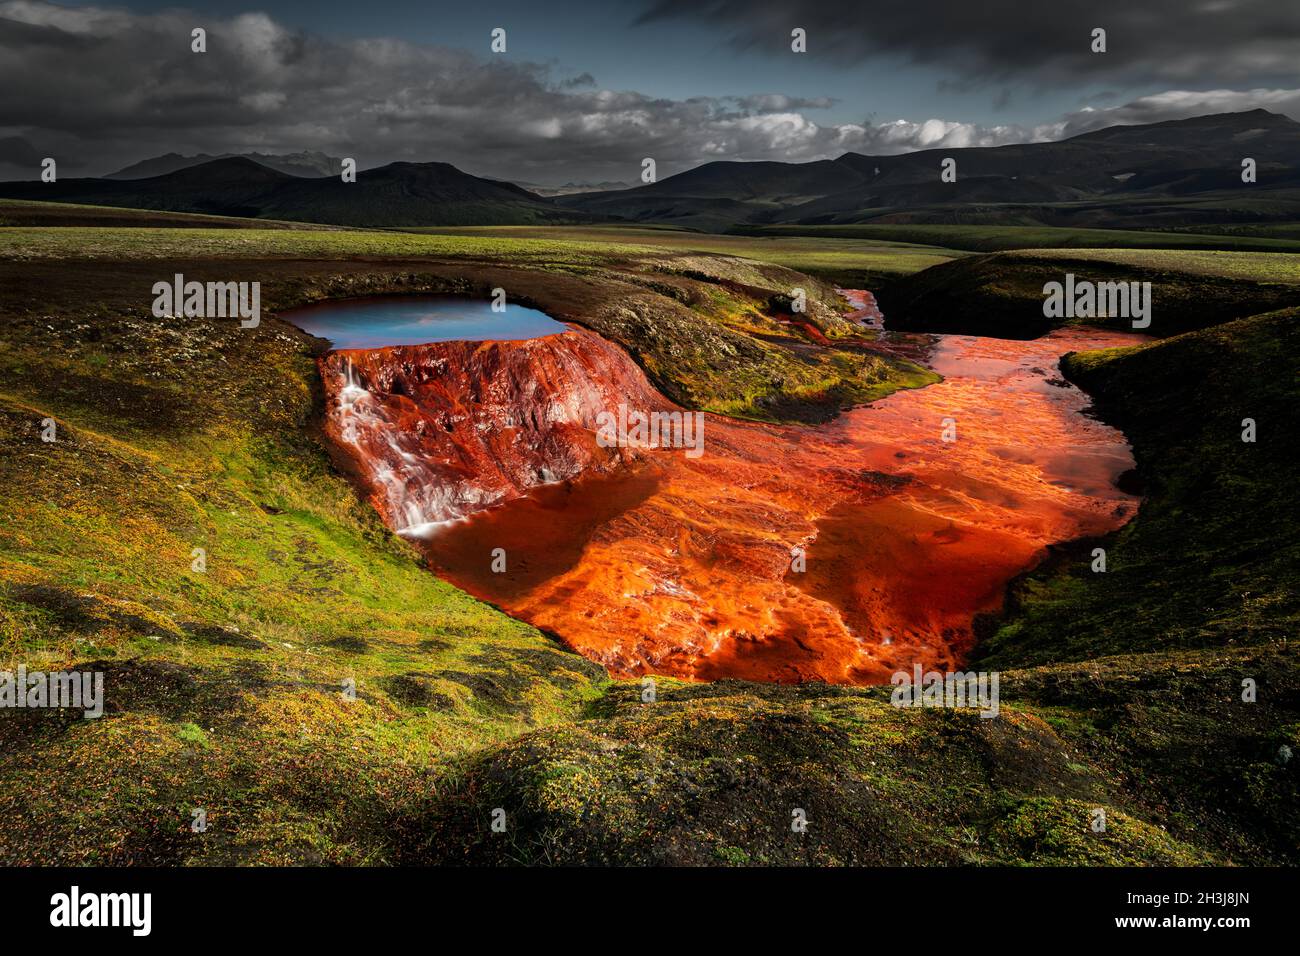 Maravilla natural de Rauðauga (Ojo Rojo) en las tierras altas de Islandia. Foto de stock